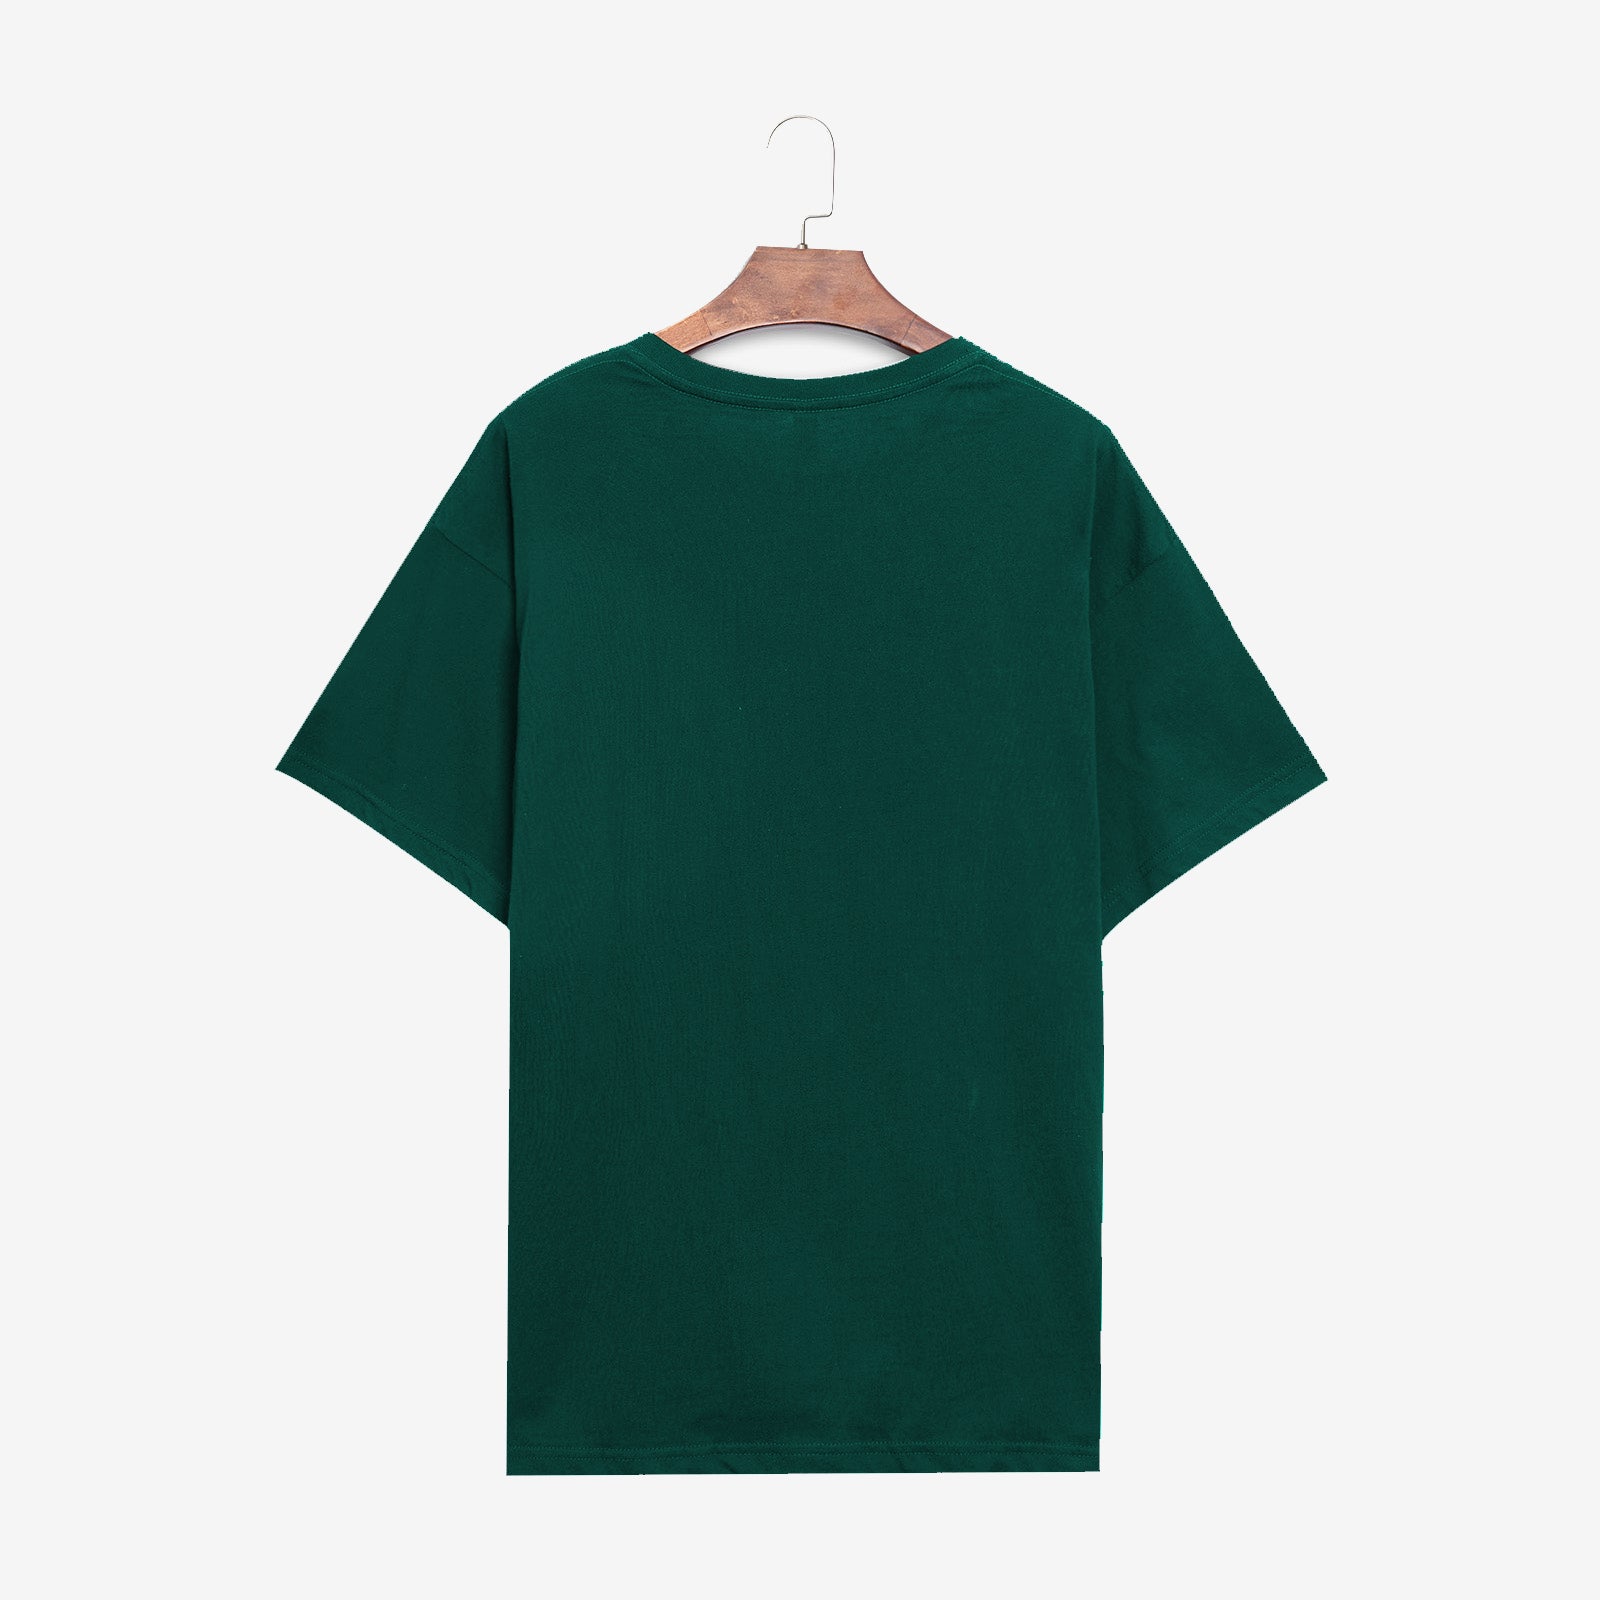 Neojana Green Little Dragon Print T-Shirt - chicyea